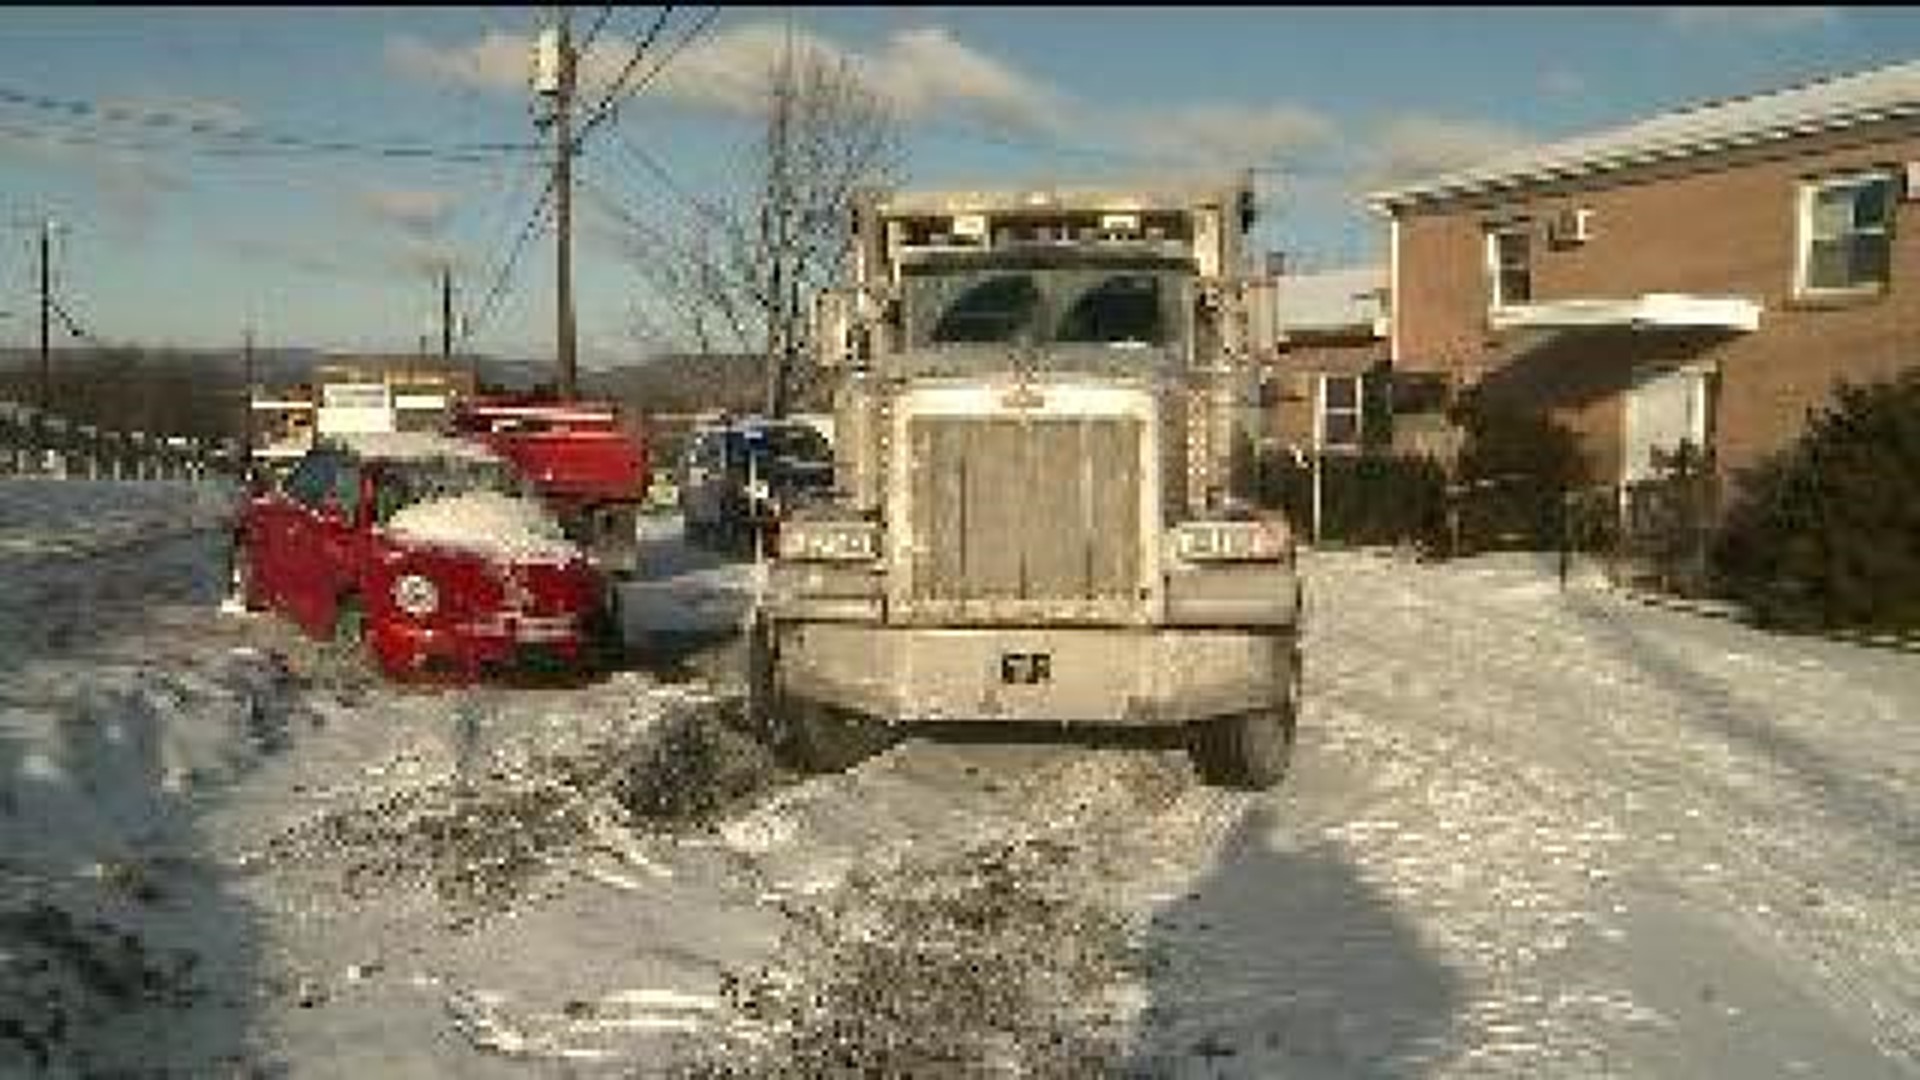 Runaway Dump Truck Damage Won’t Delay Business Relocation